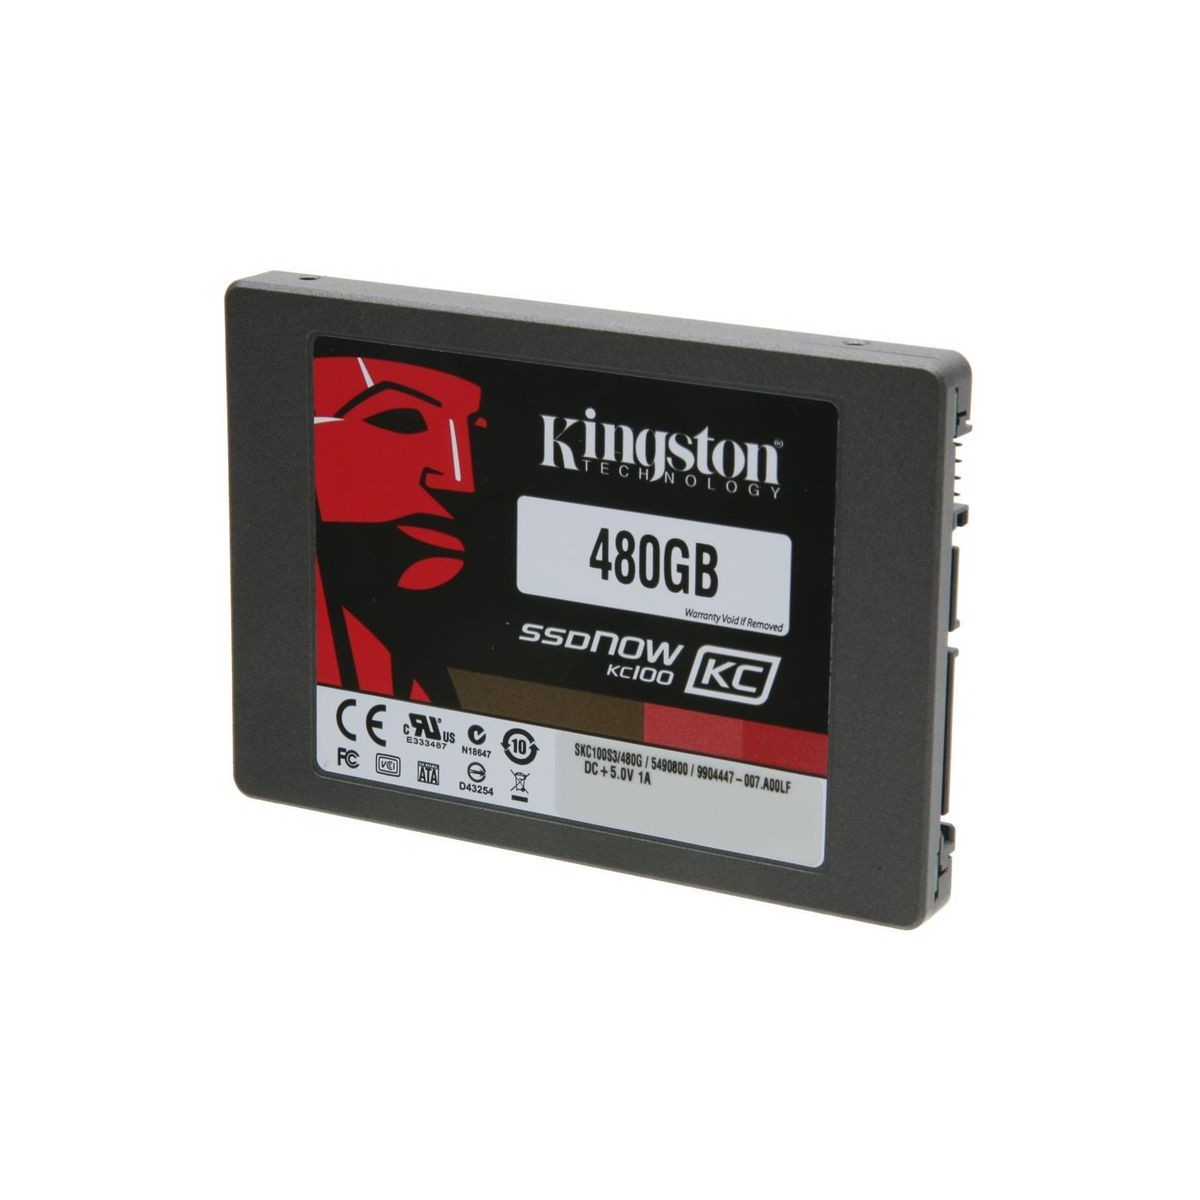 DYSK KINGSTON 480GB SSD SATA 6G 2,5 SKC100S3